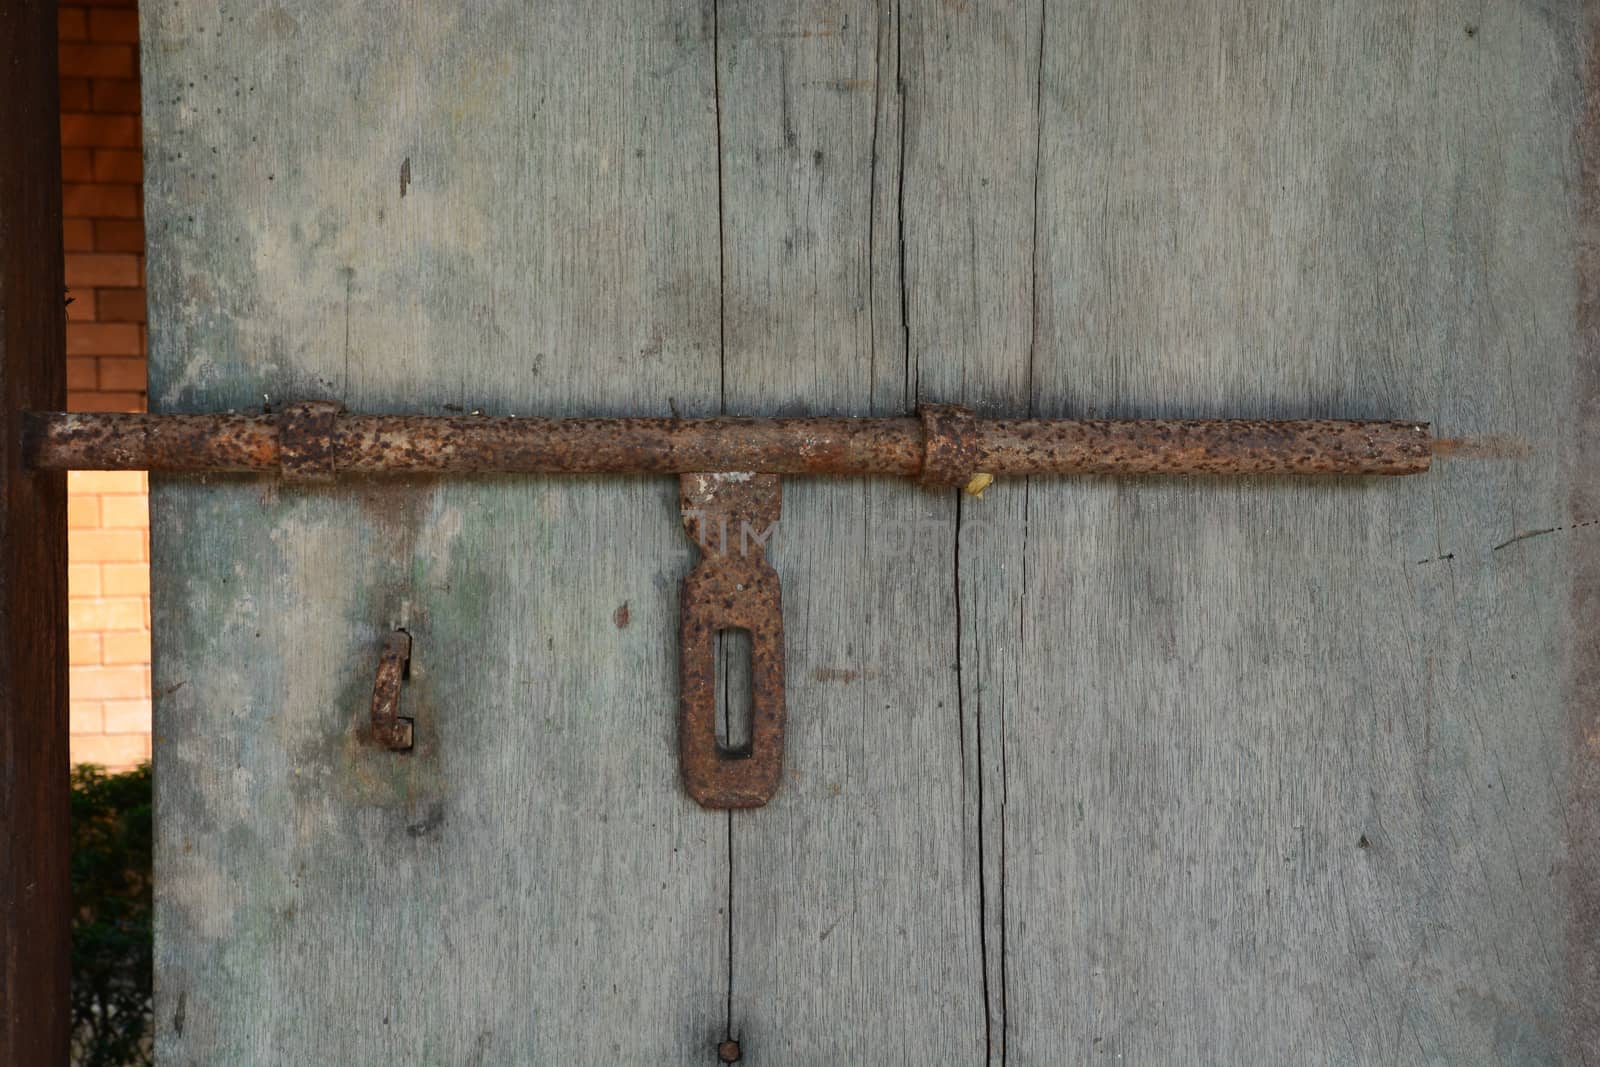 Vintage Door Lock rusted on old door wood by ideation90